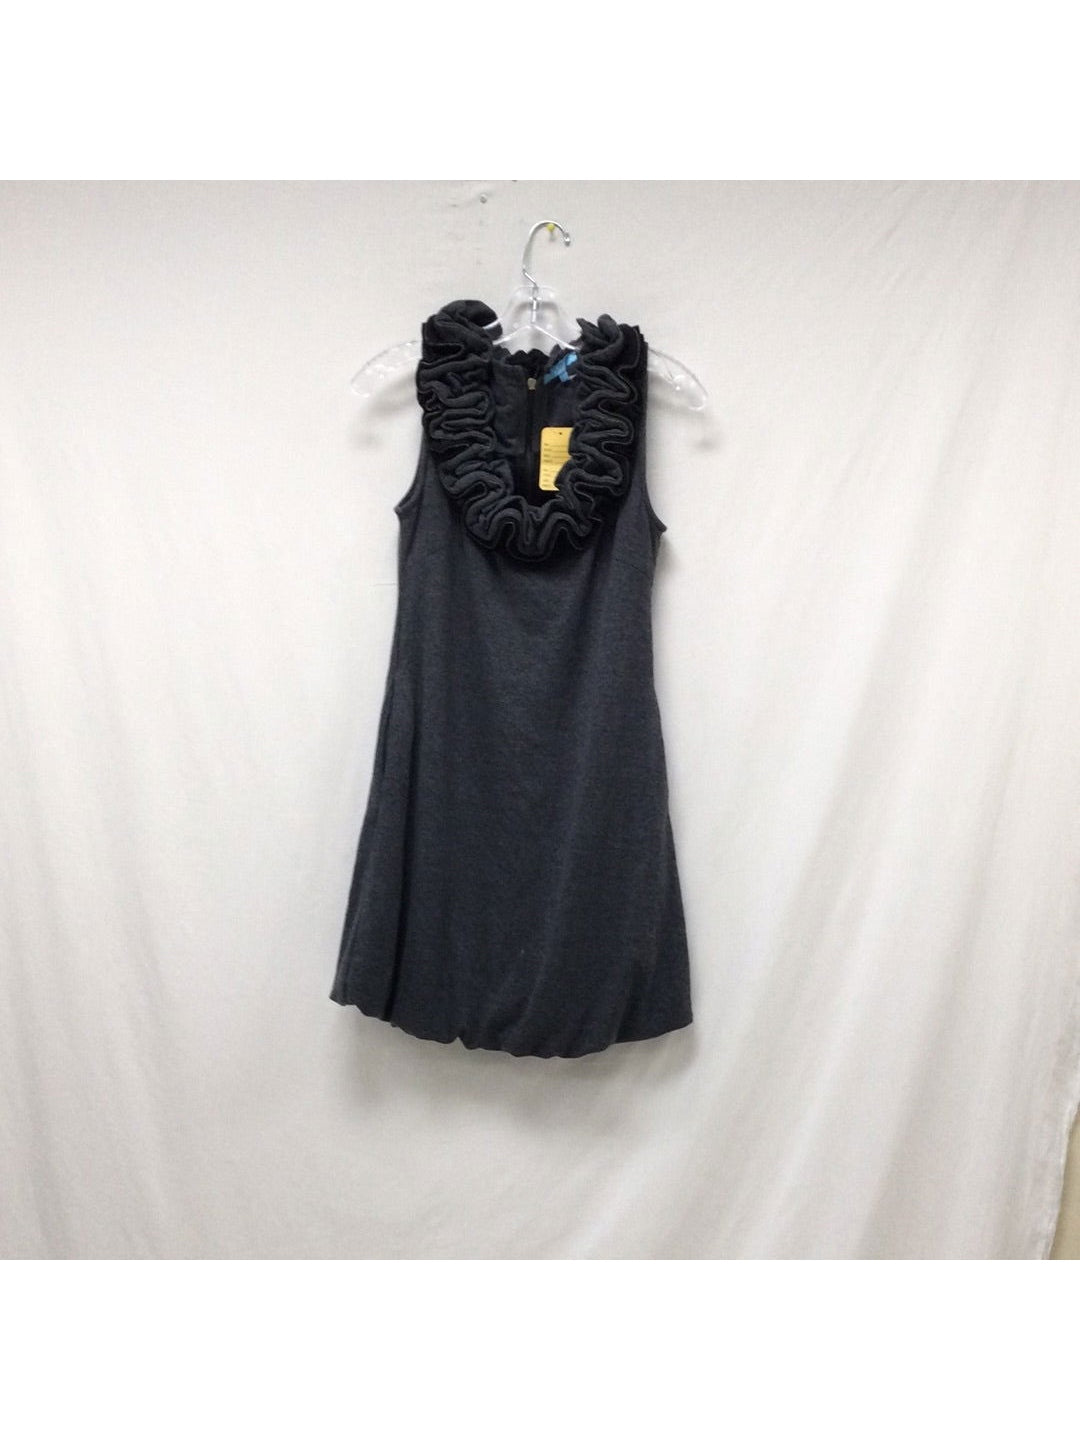 Whish Dress Grey Women's Medium - The Kennedy Collective Thrift - 